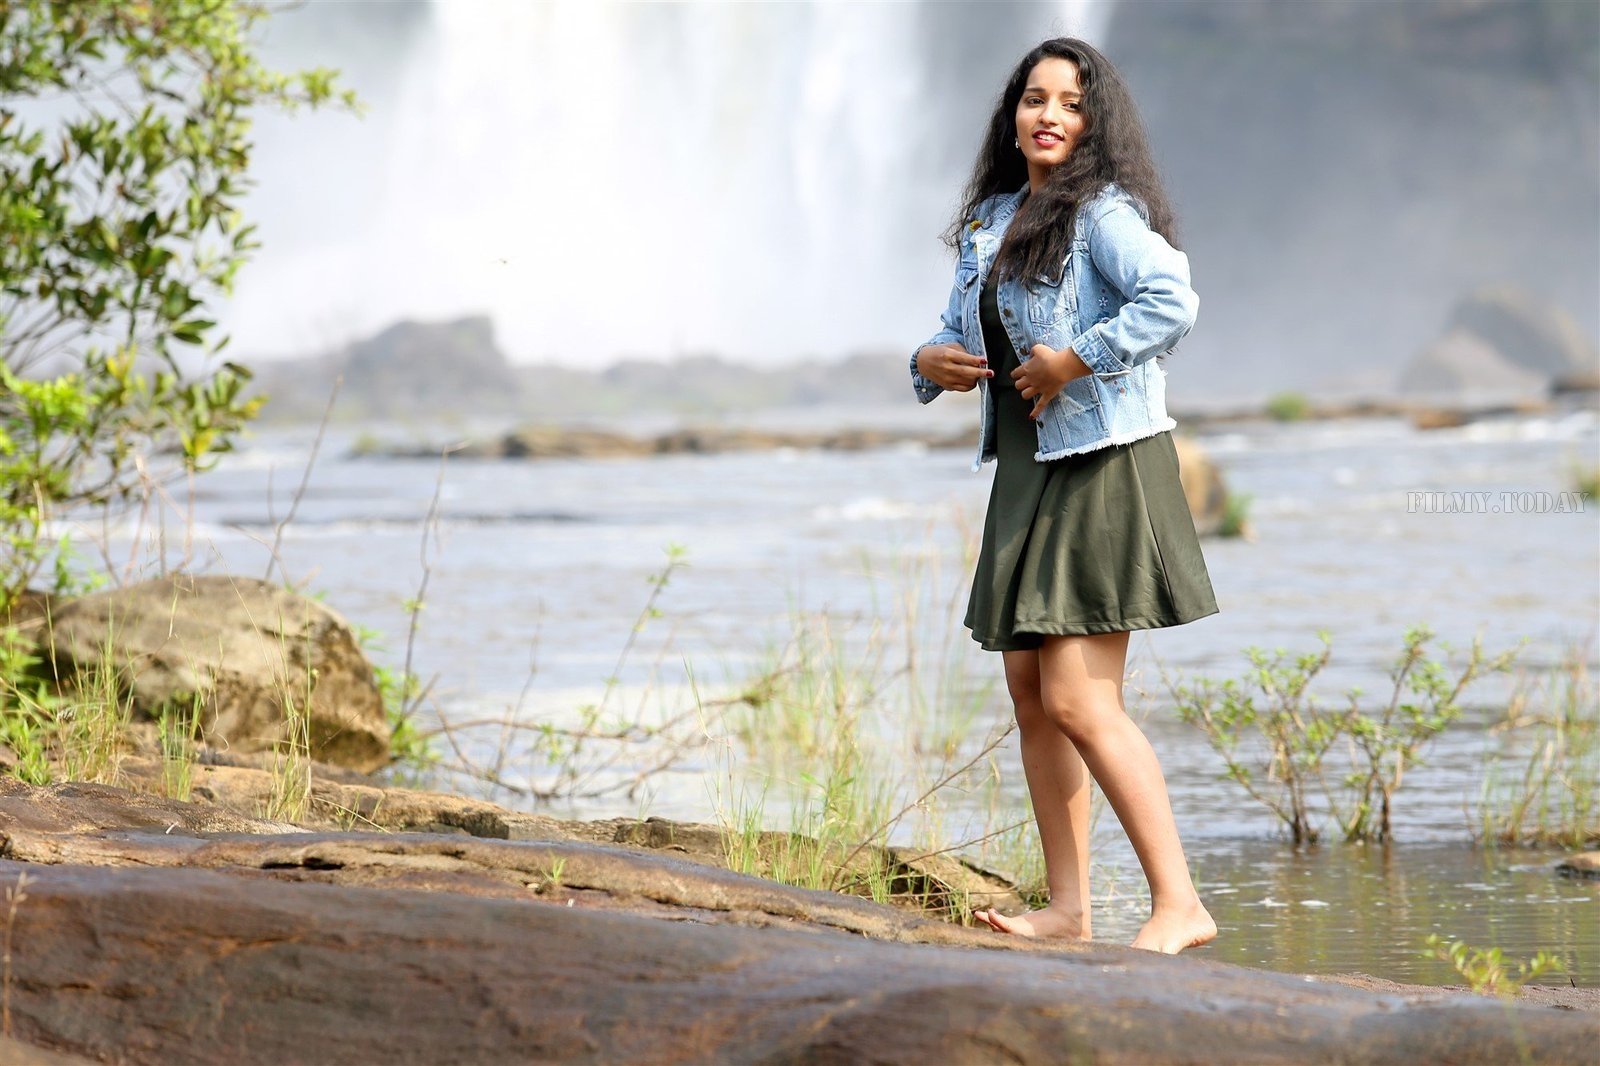 Actress Malavika Menon Hot Stills From Tamil Movie 'Aruva Sandai' | Picture 1567100